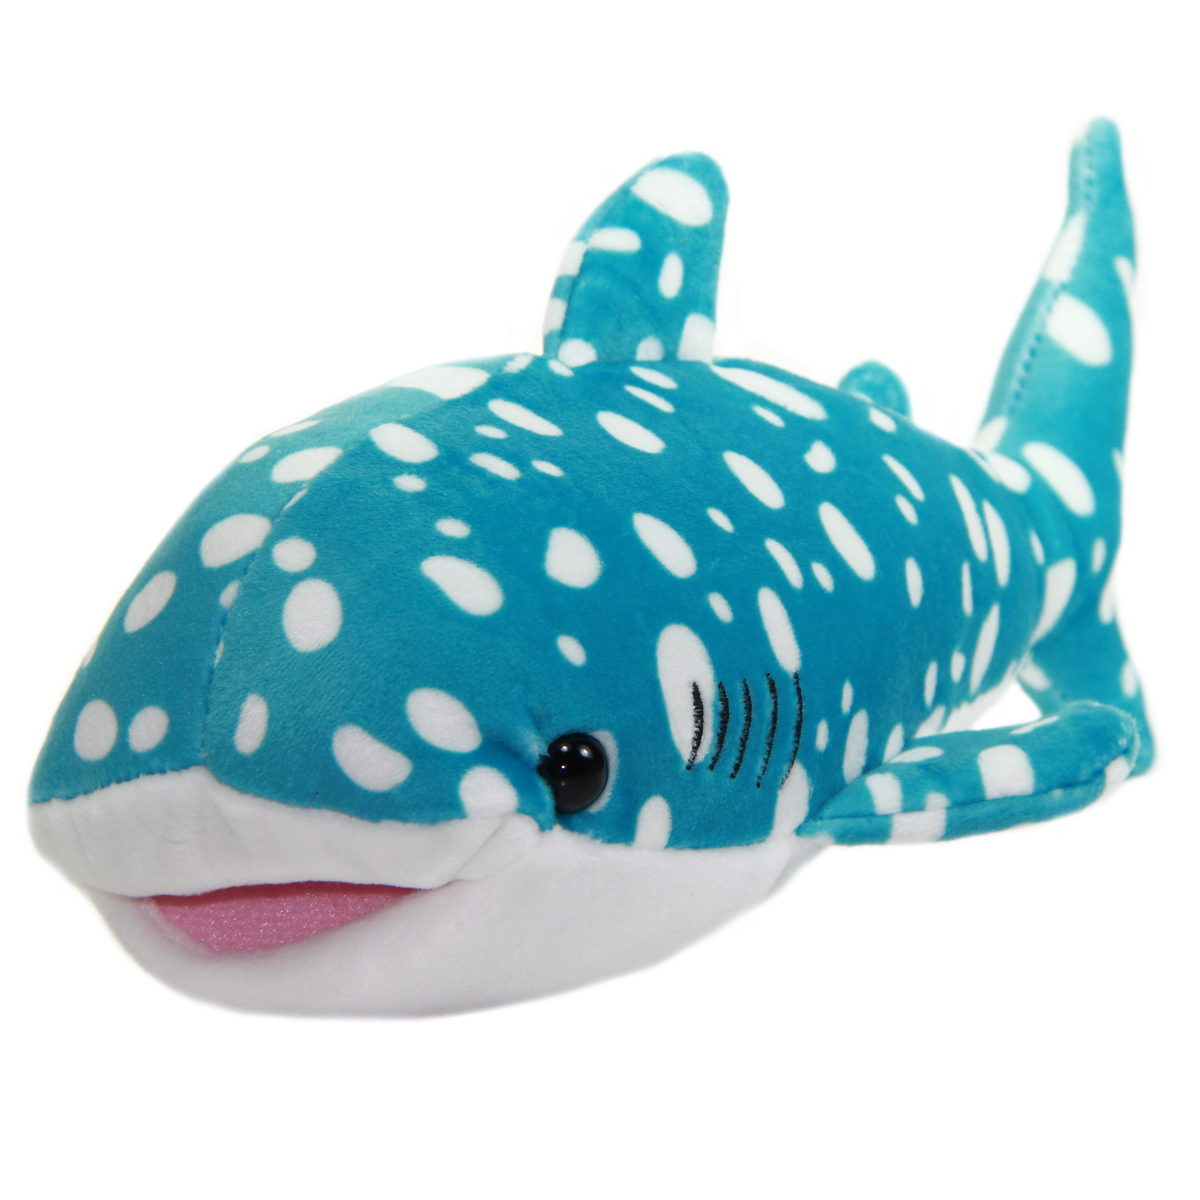 Aquarium Collection Plush Whale Shark Plush Toy Super Soft Stuffed Animal Blue White 8 Inches